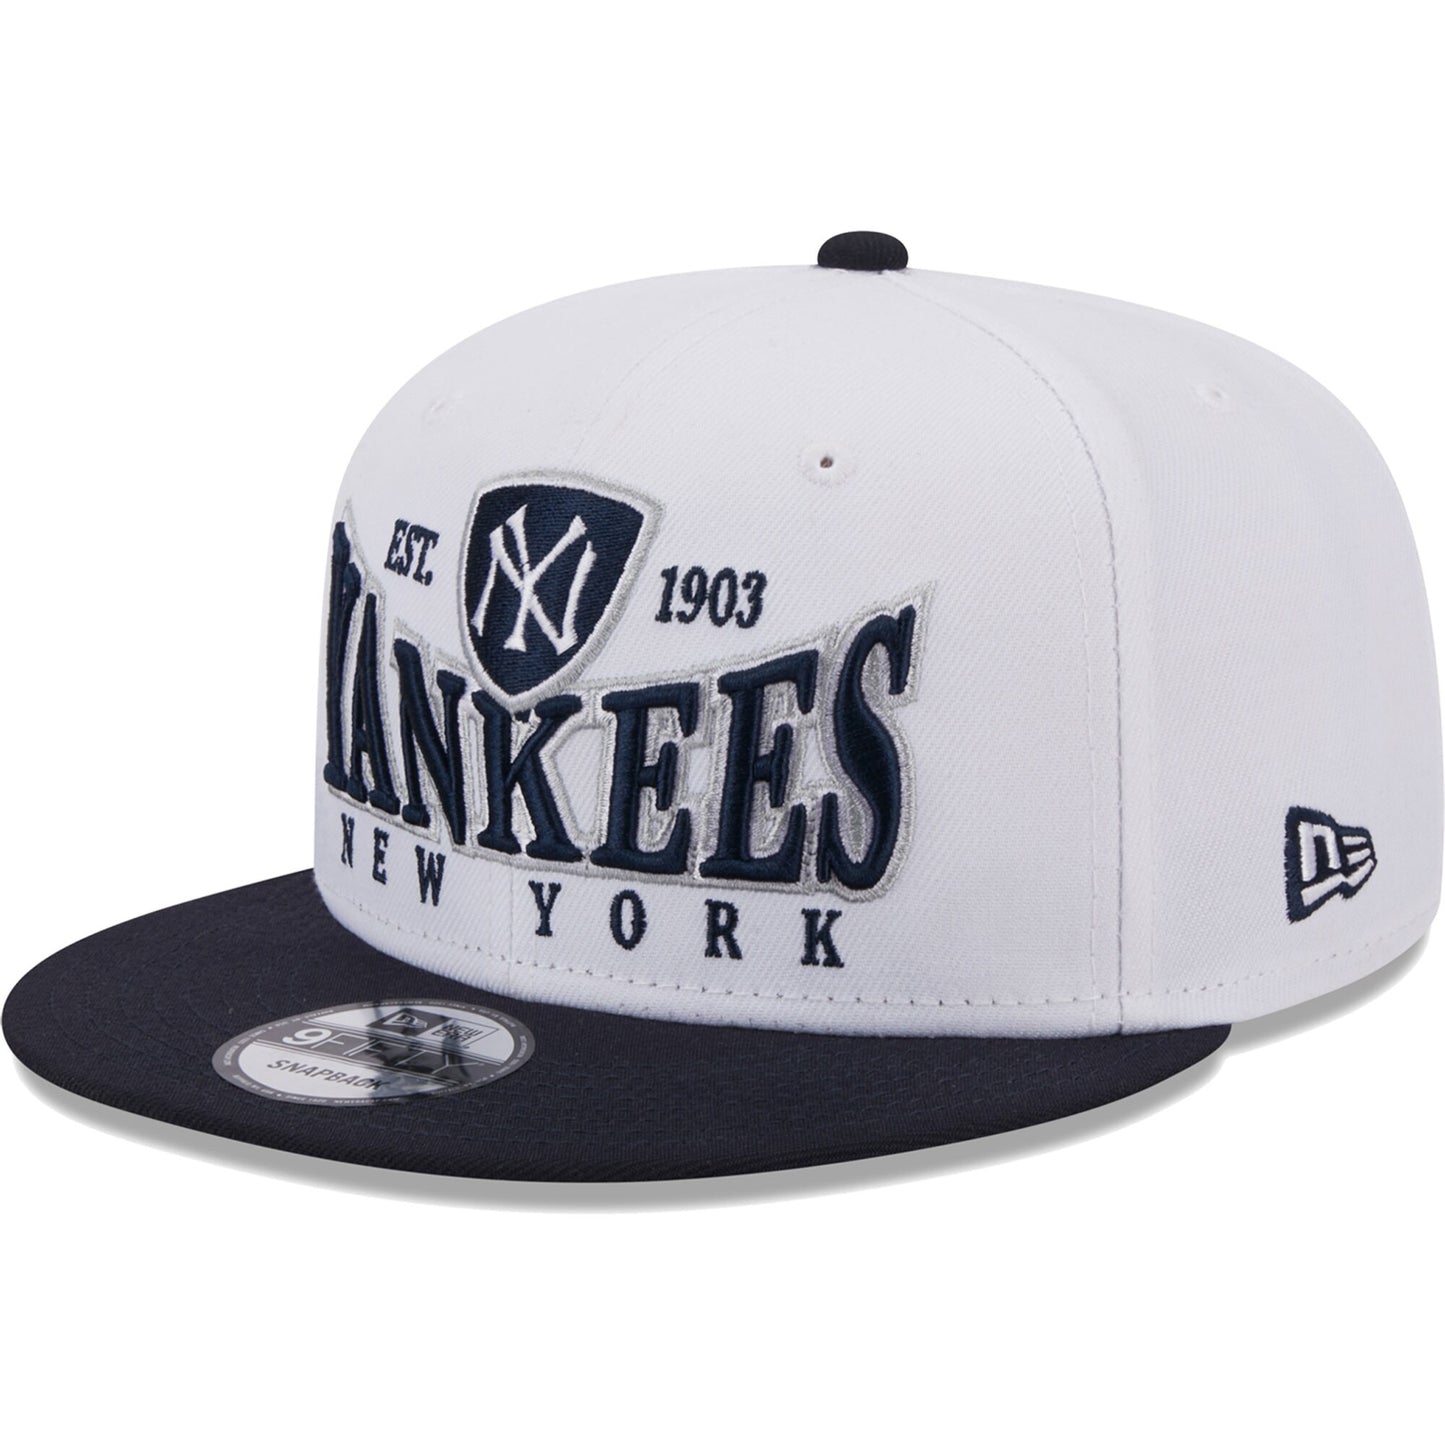 New York Yankees New Era Crest 9FIFTY Snapback Hat - White/Navy